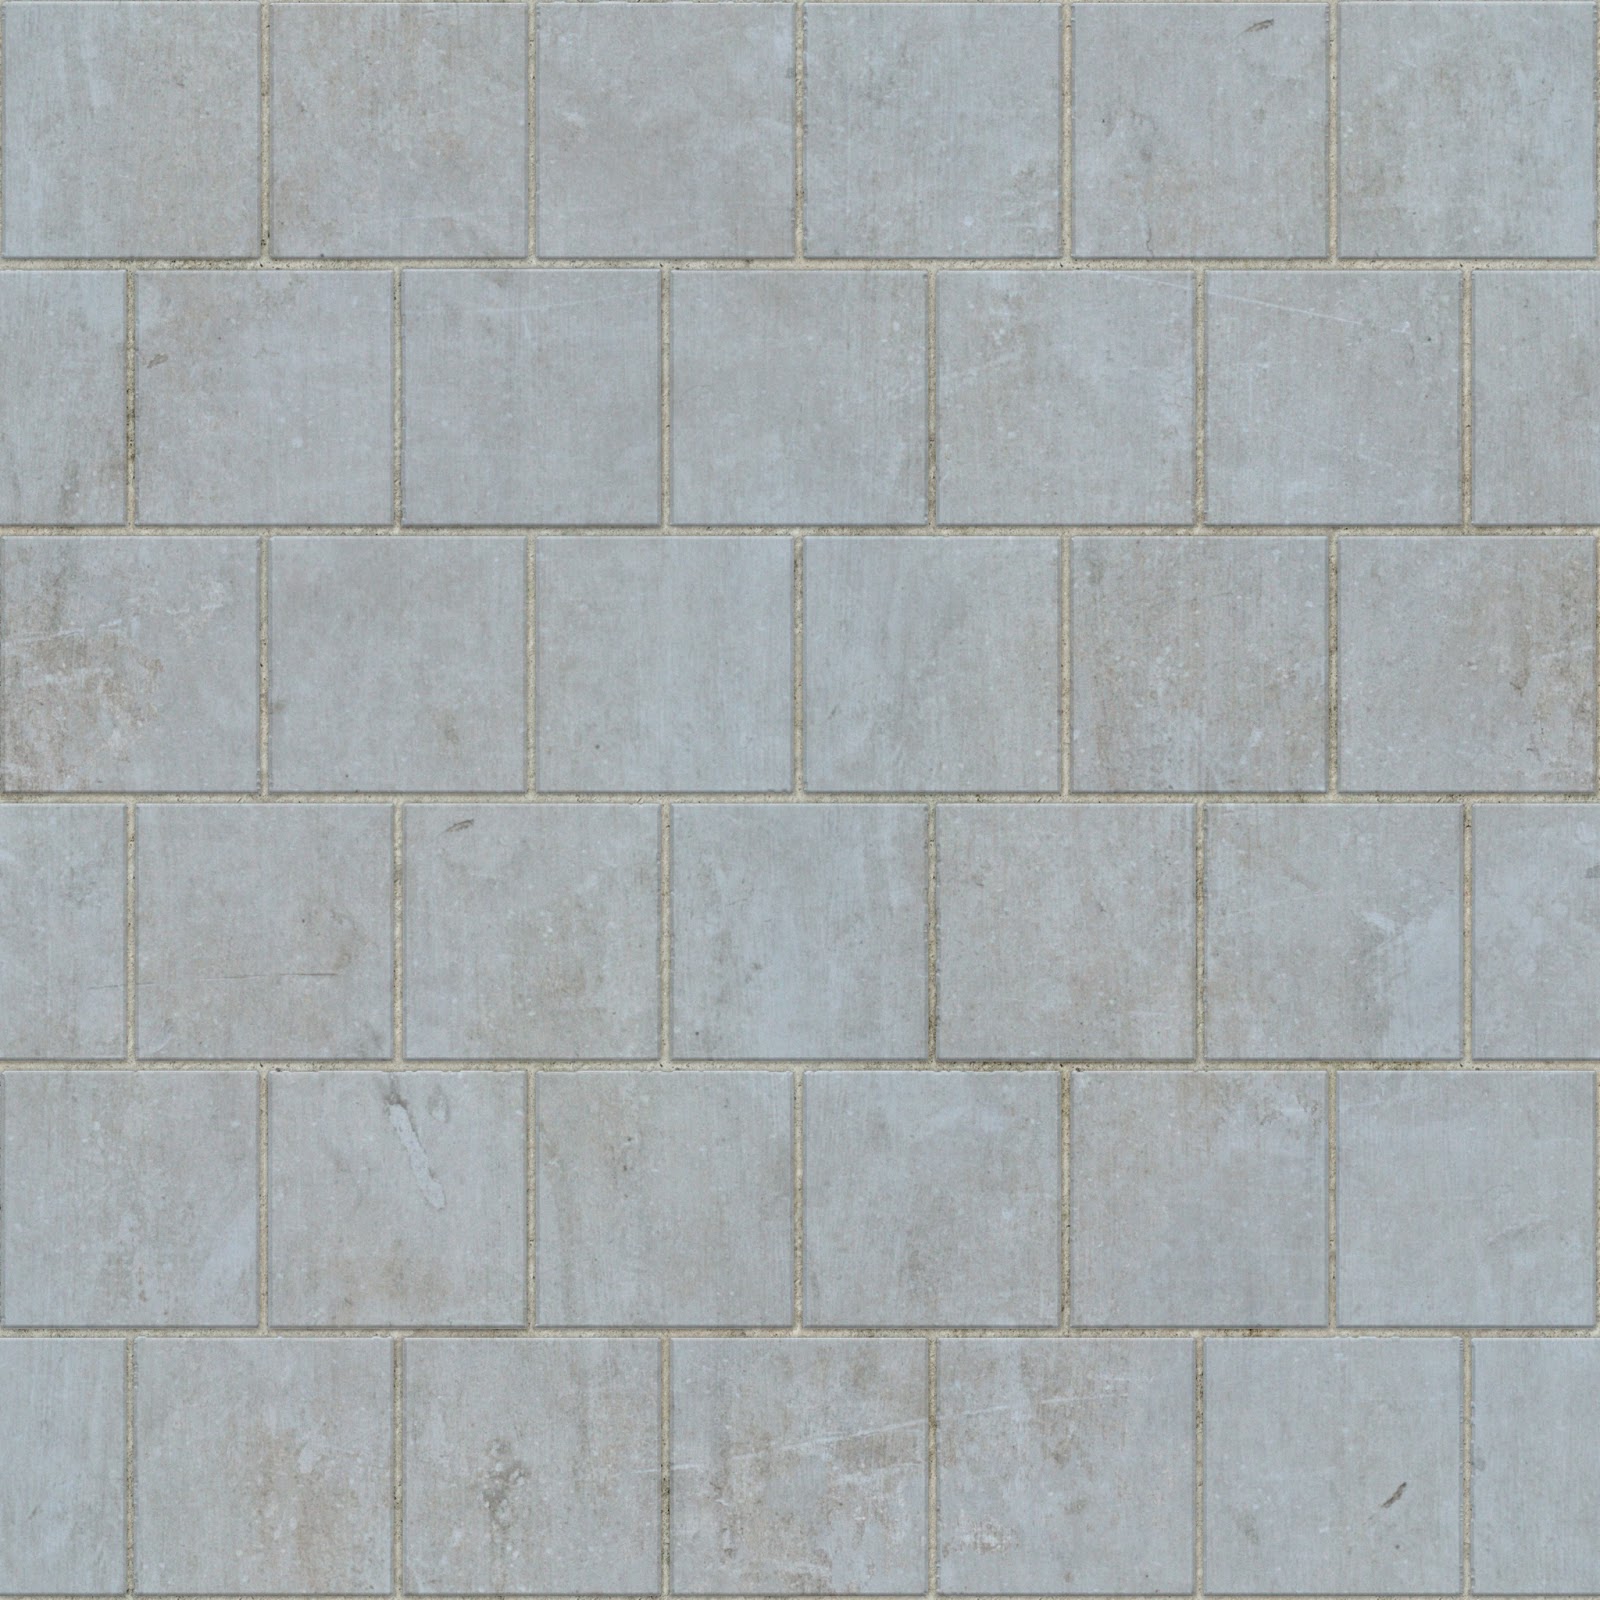 High Resolution Seamless Textures: Brick tiles concrete panels ...